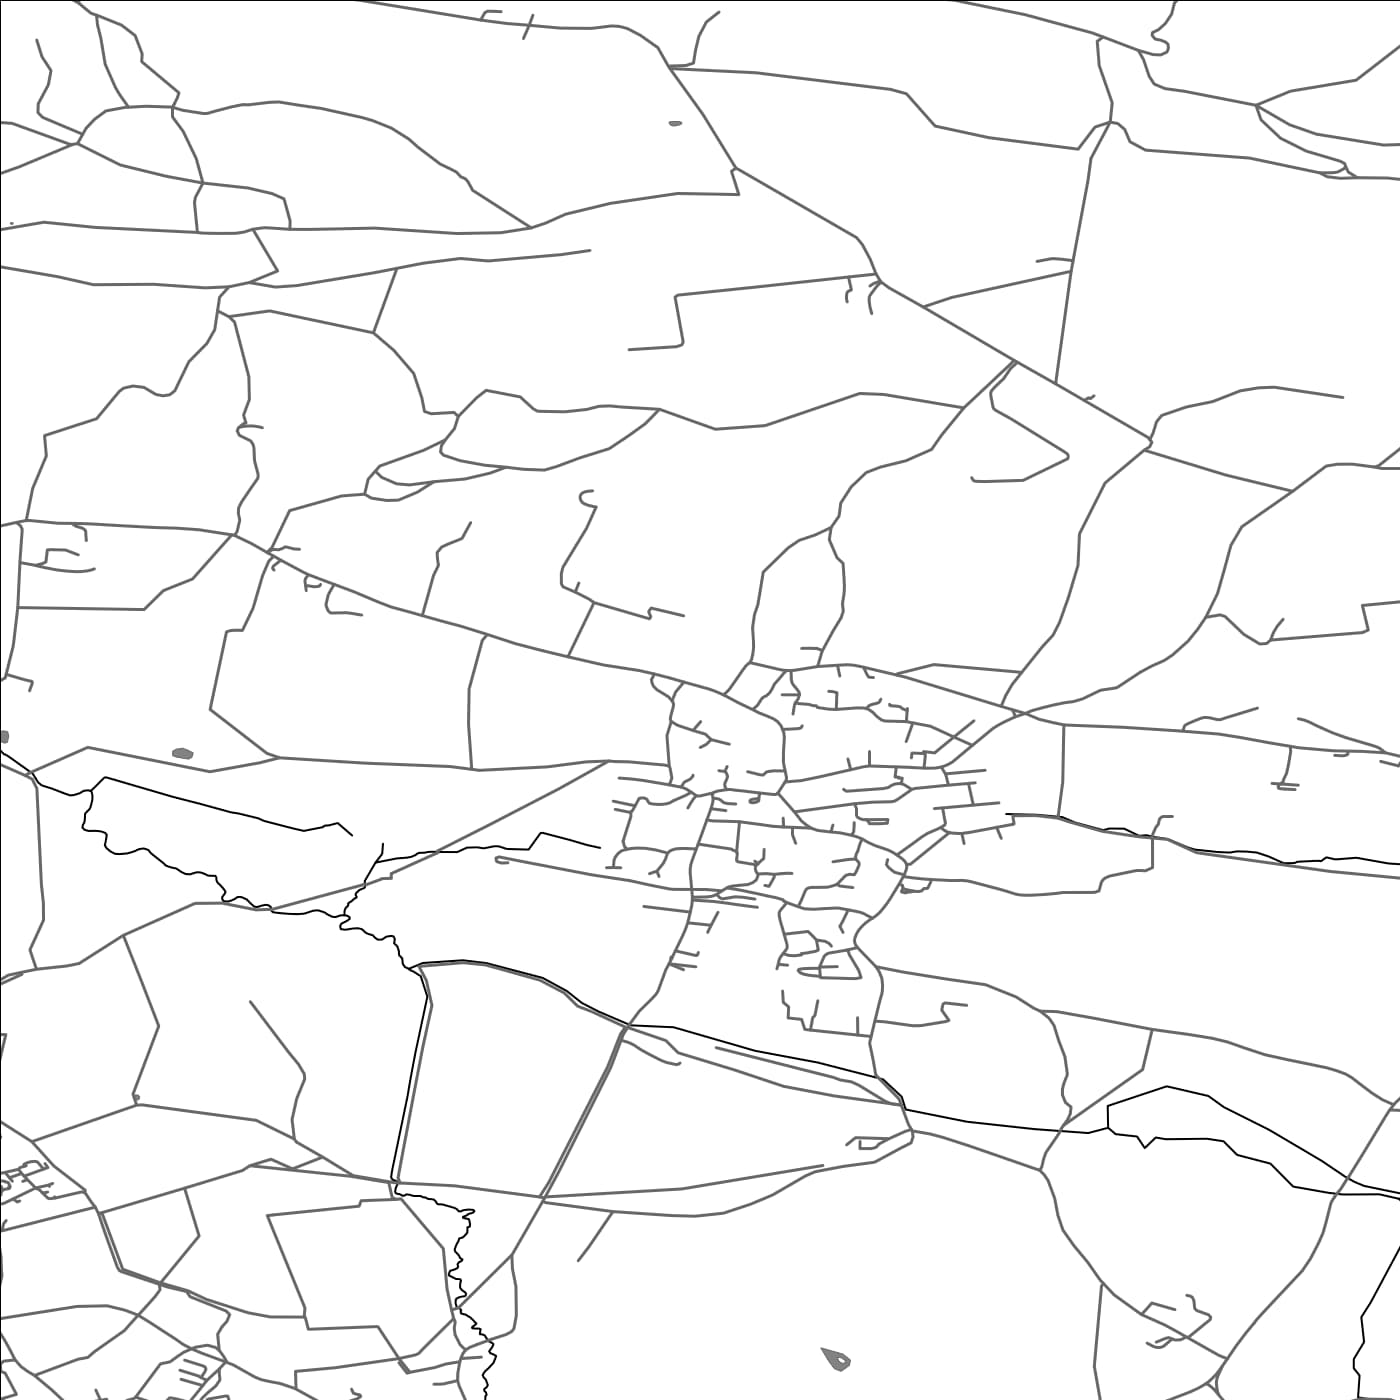 ROAD MAP OF WRINGTON, UNITED KINGDOM BY MAPBAKES